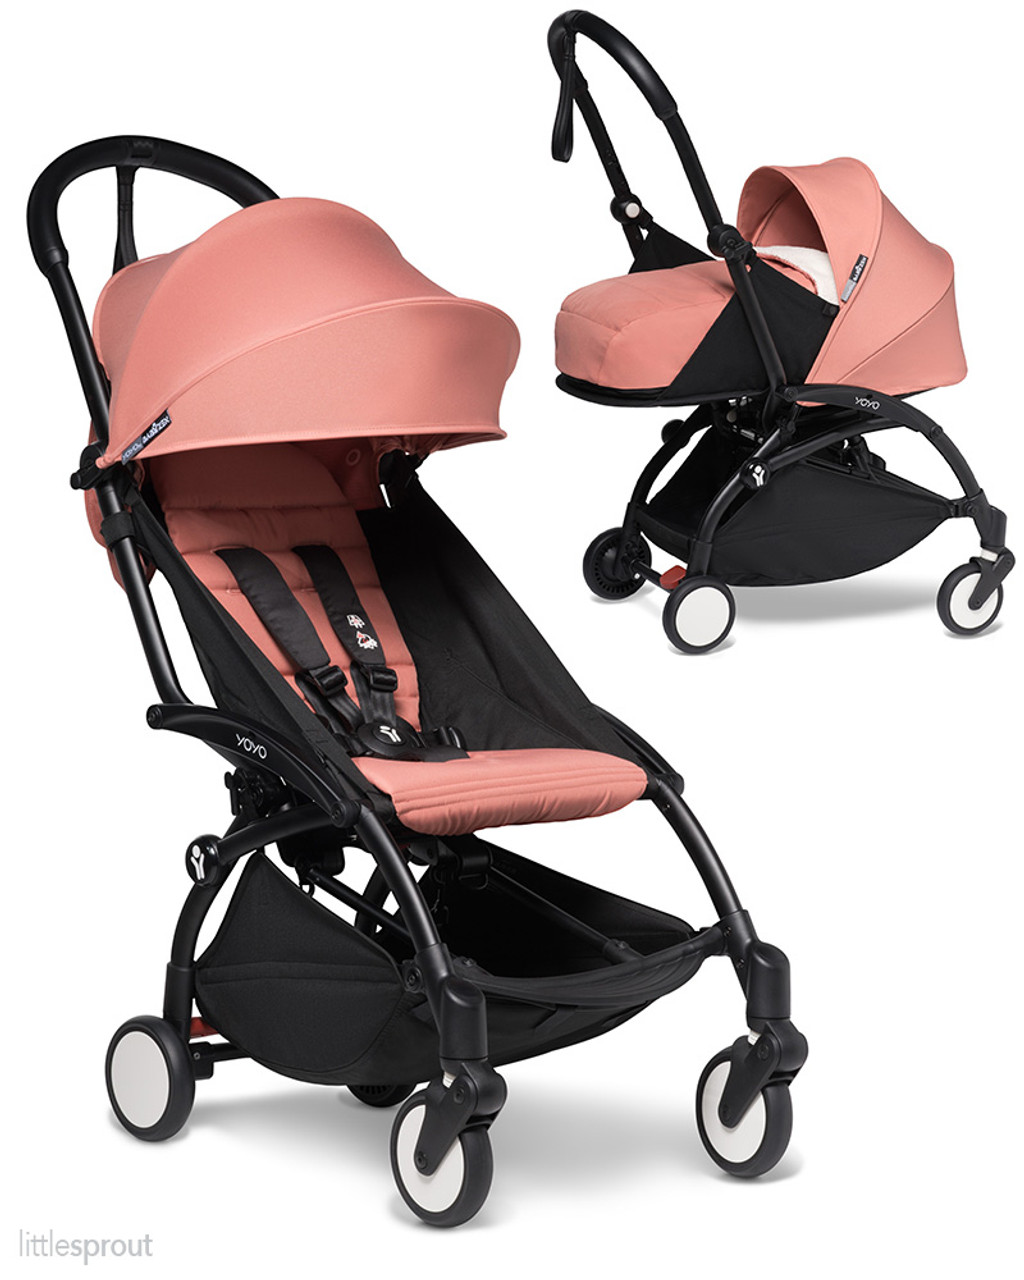 Best Infant Car Seats Compatible with Babyzen YOYO+ / YOYO2 Stroller